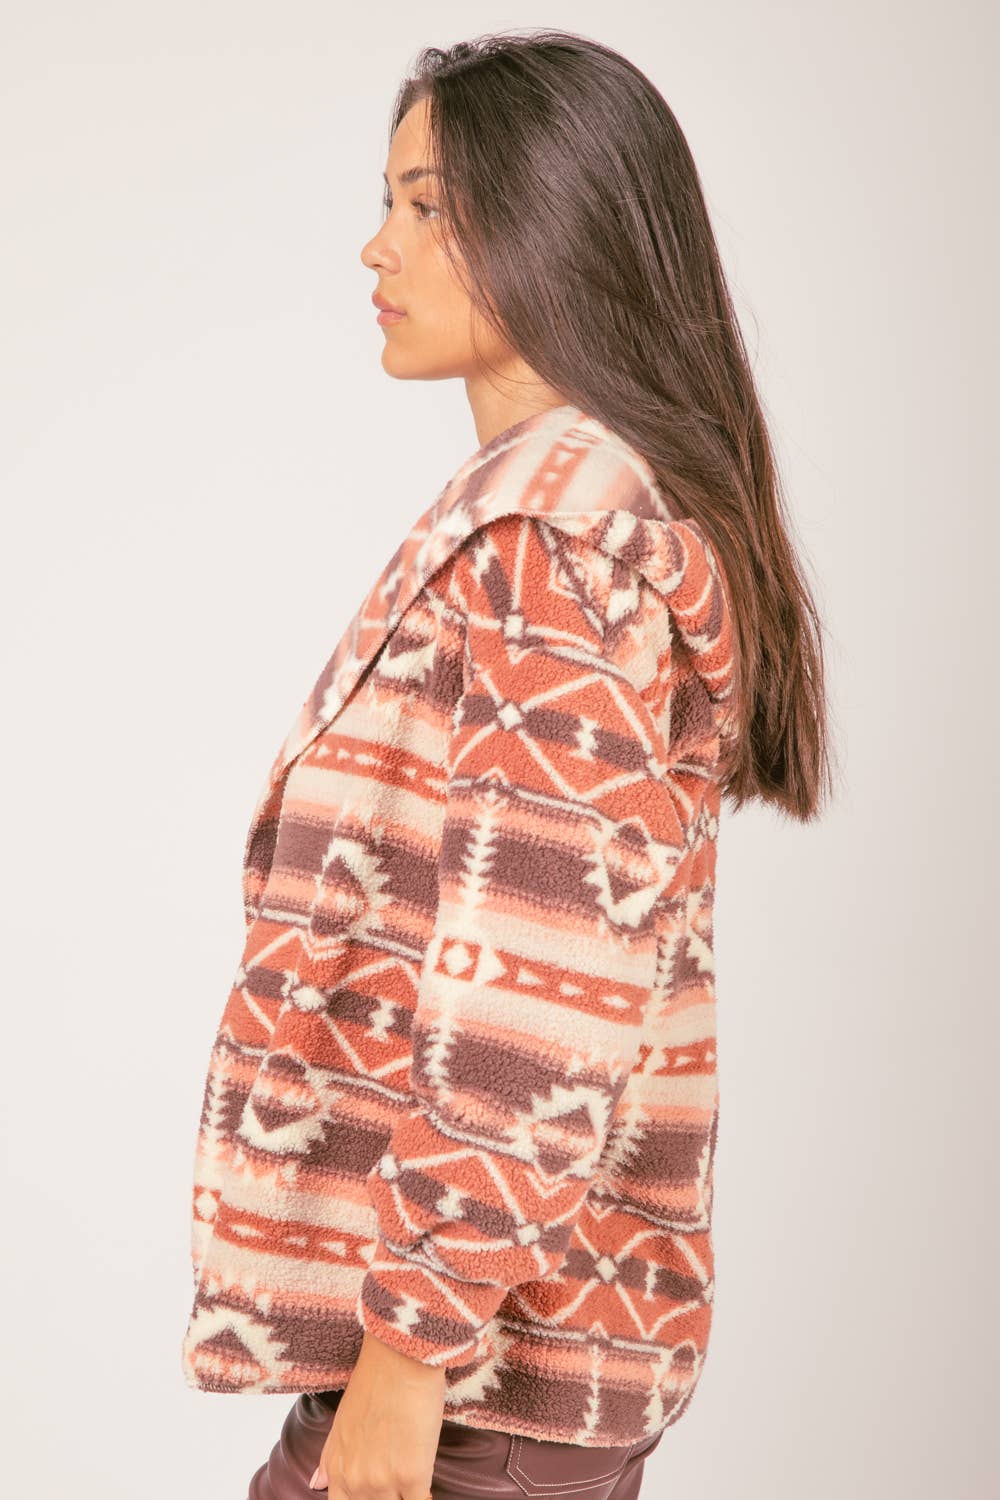 Aztec Tribal Print Hooded Fleece Jacket